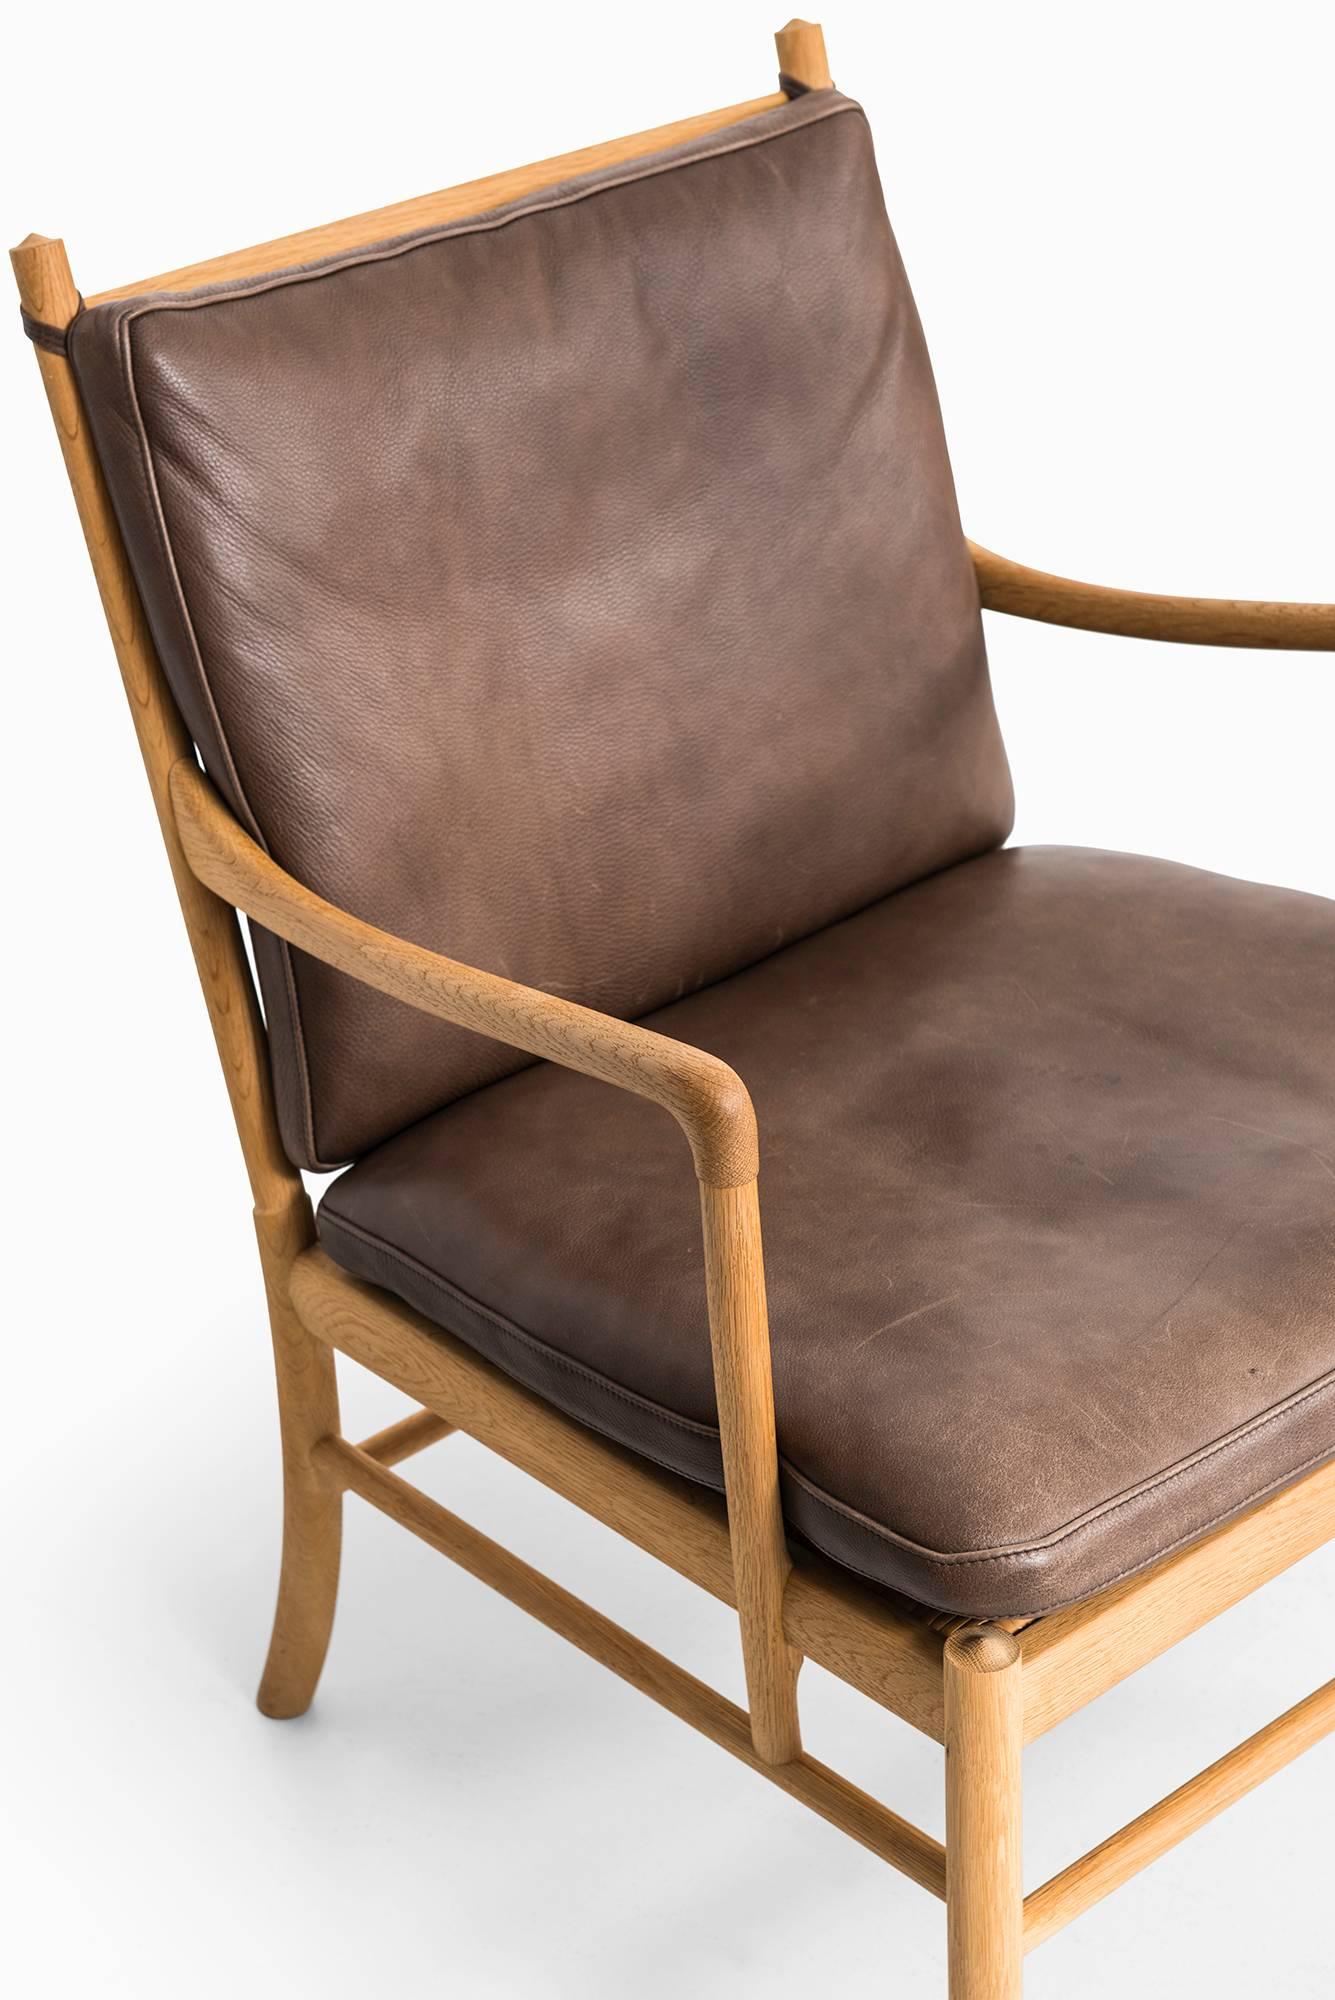 Scandinavian Modern Ole Wanscher Colonial Easy Chairs by P.J. Furniture in Denmark